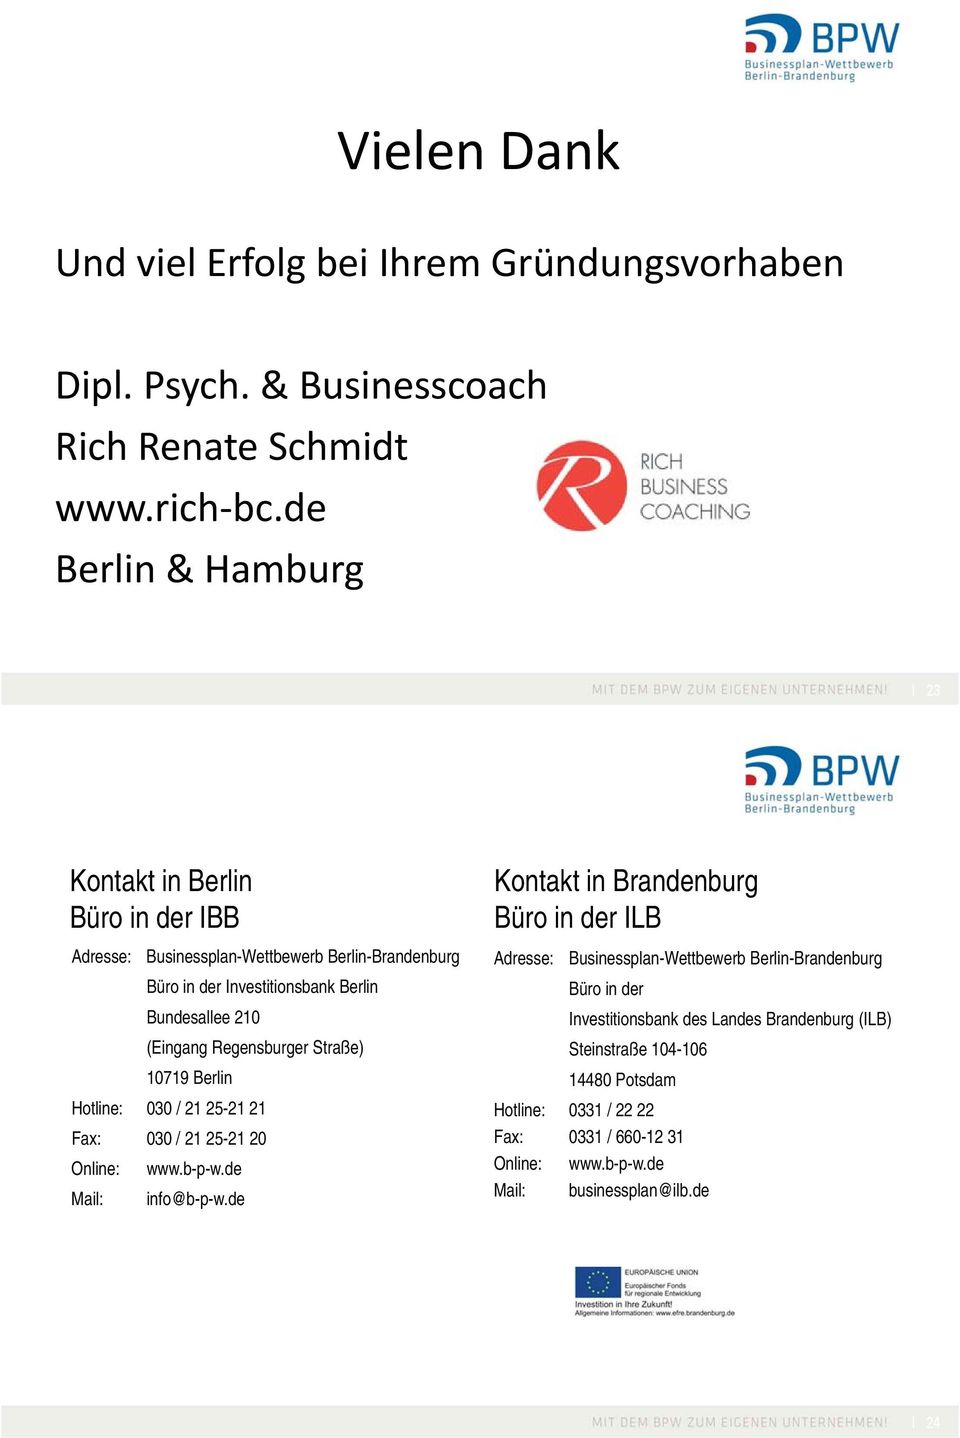 Investitionsbank Berlin Bundesallee 210 (Eingang Regensburger Straße) 10719 Berlin Hotline: 030 / 21 25-21 21 Fax: 030 / 21 25-21 20 Online: www.b-p-w.de Mail: info@b-p-w.